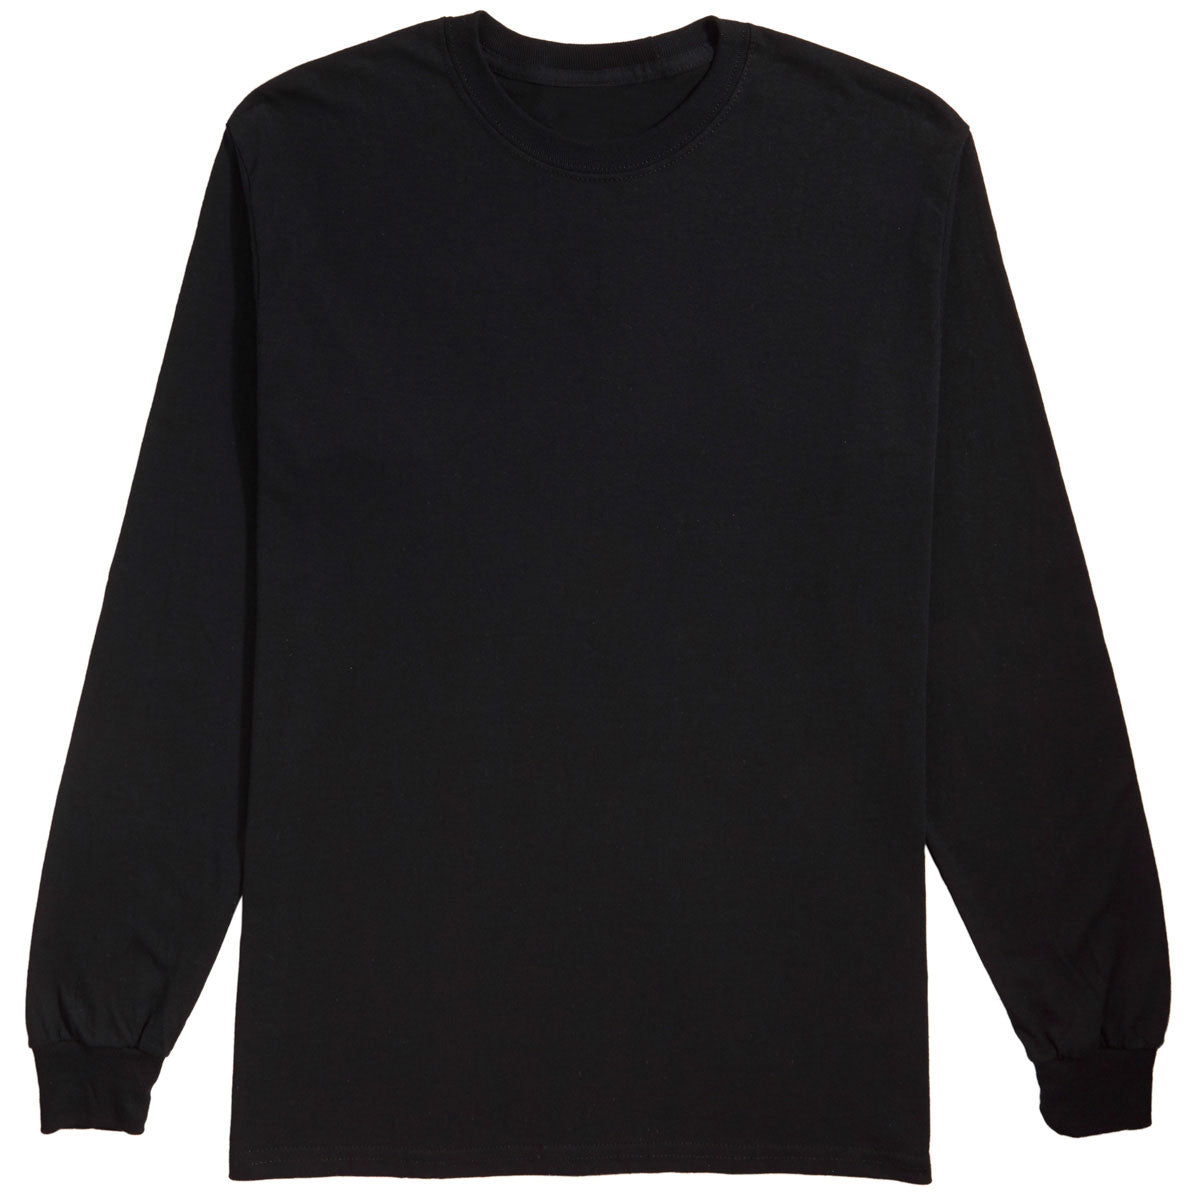 Converse Mouse Long Sleeve T-Shirt - Black - LG image 1